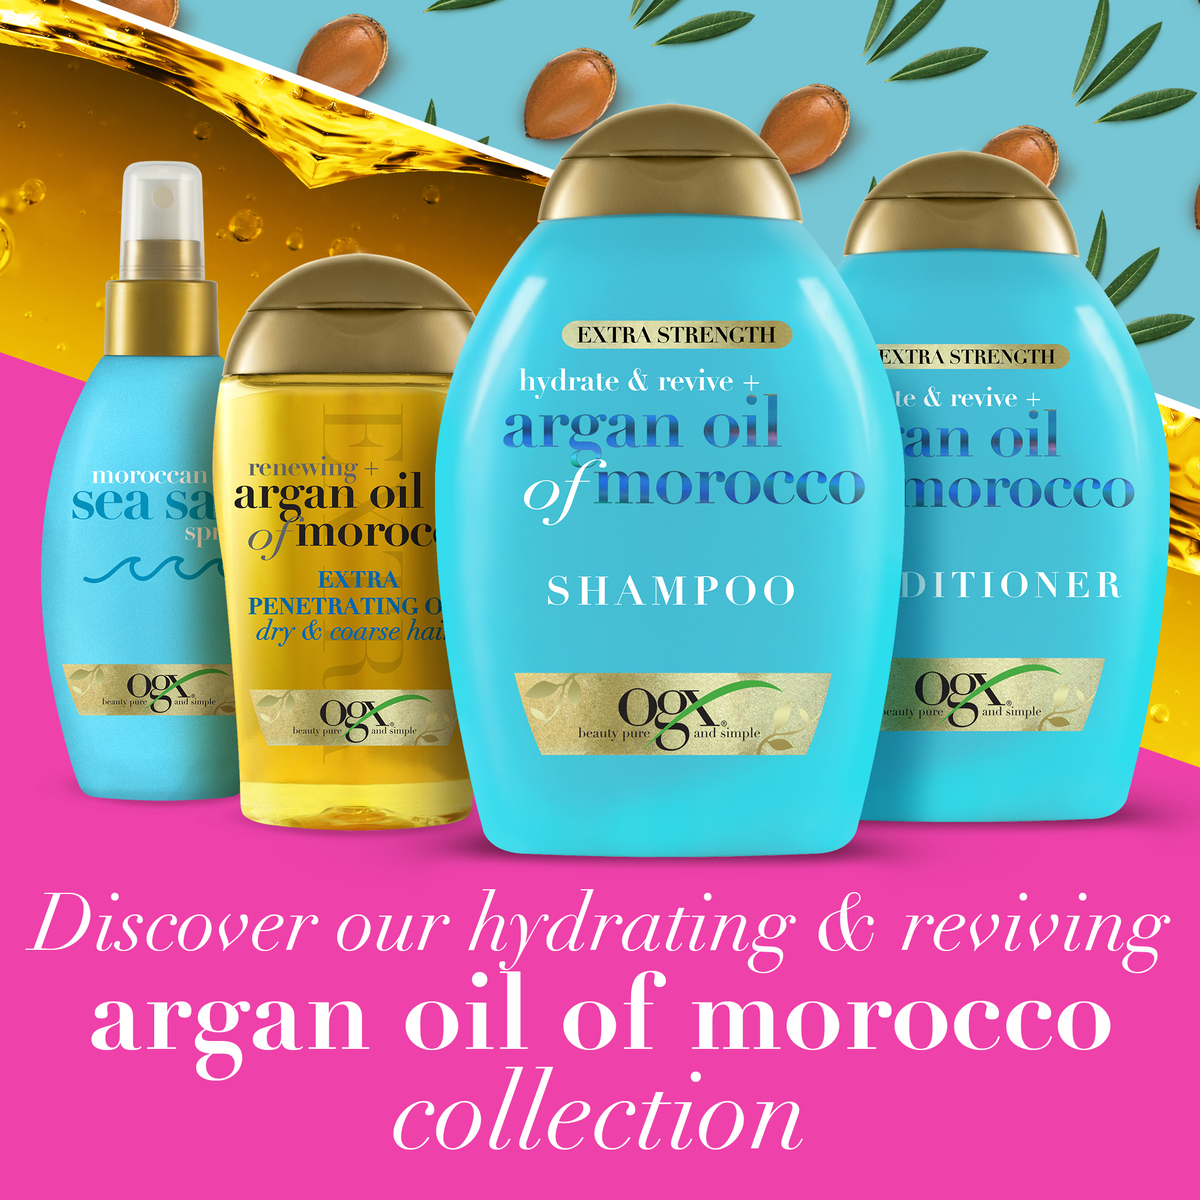 OGX Shampoo Extra Strength + Argan Oil Of Morocco 385 ml